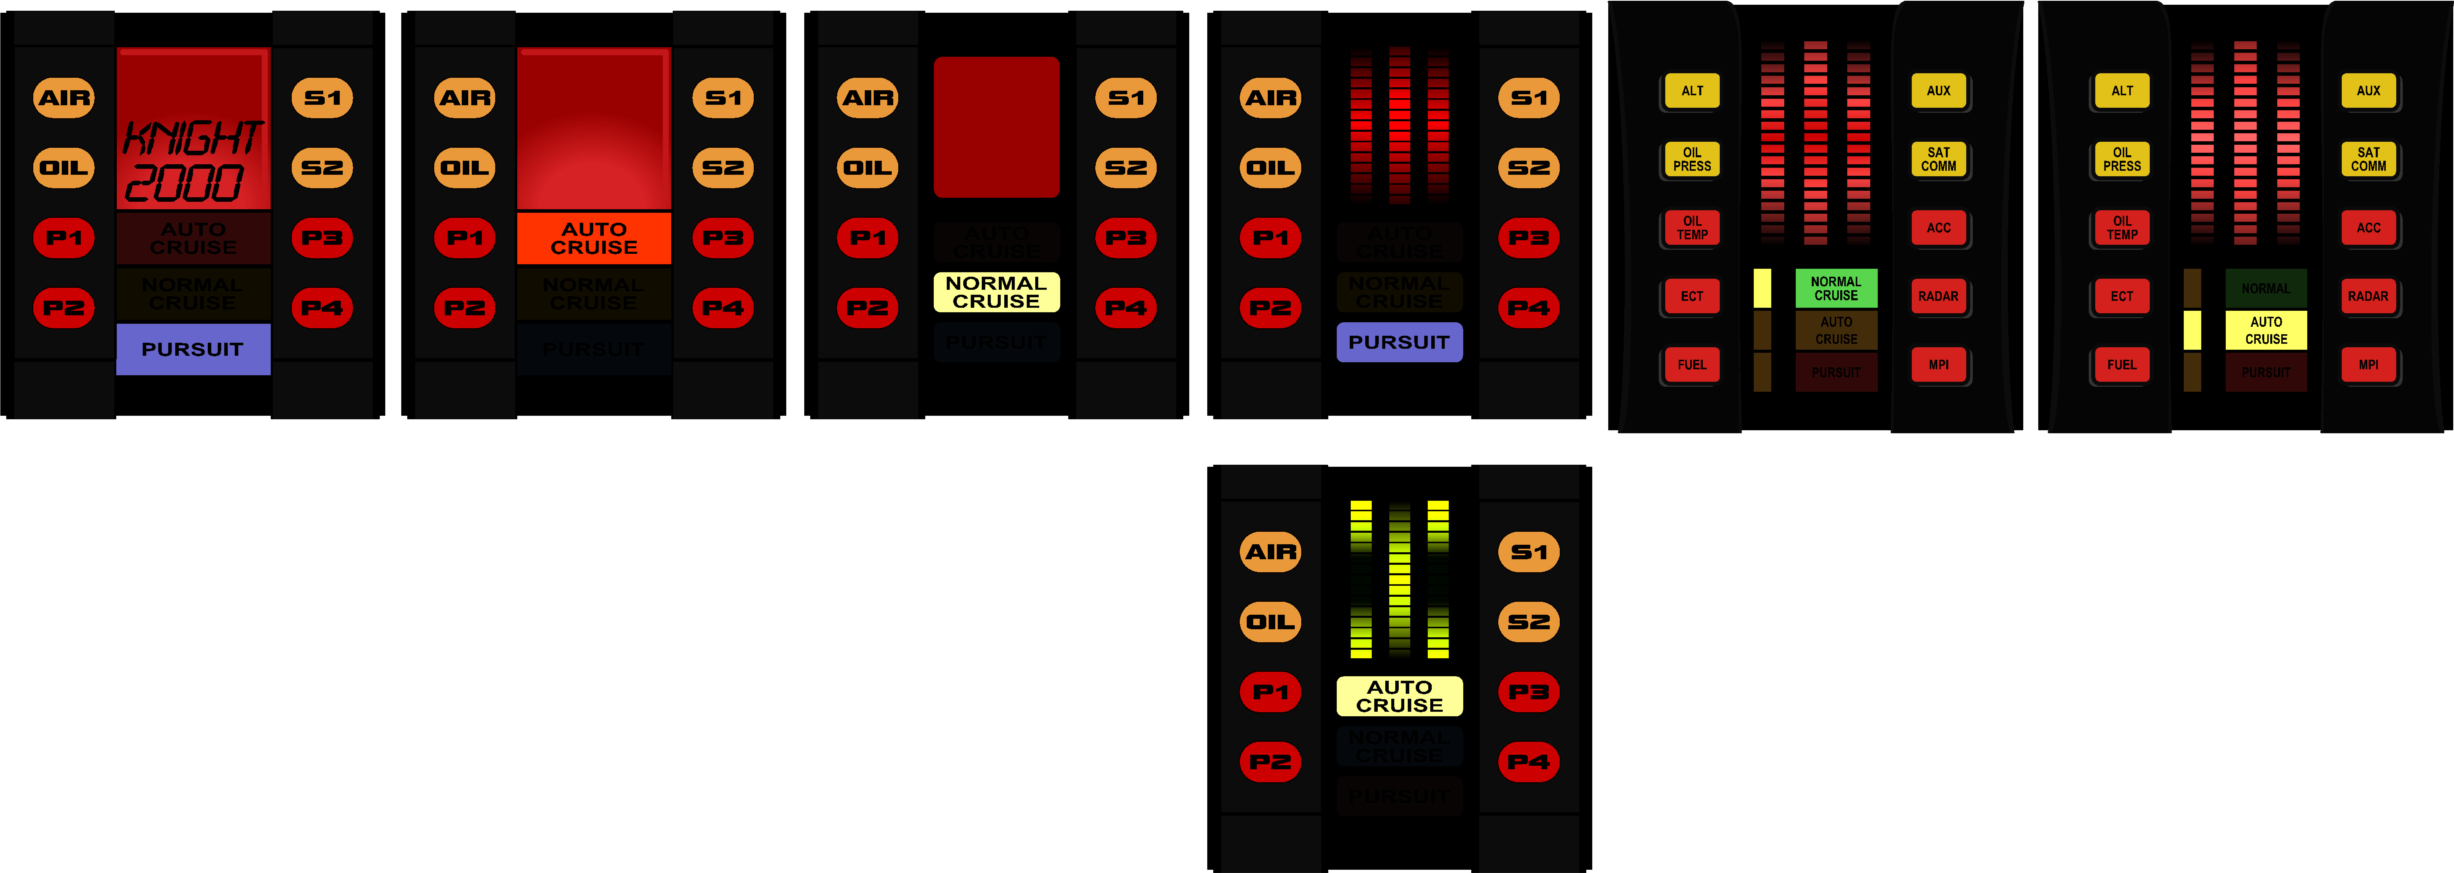 File:Modulador de voz kitt 11-4-2020.png - Wikipedia